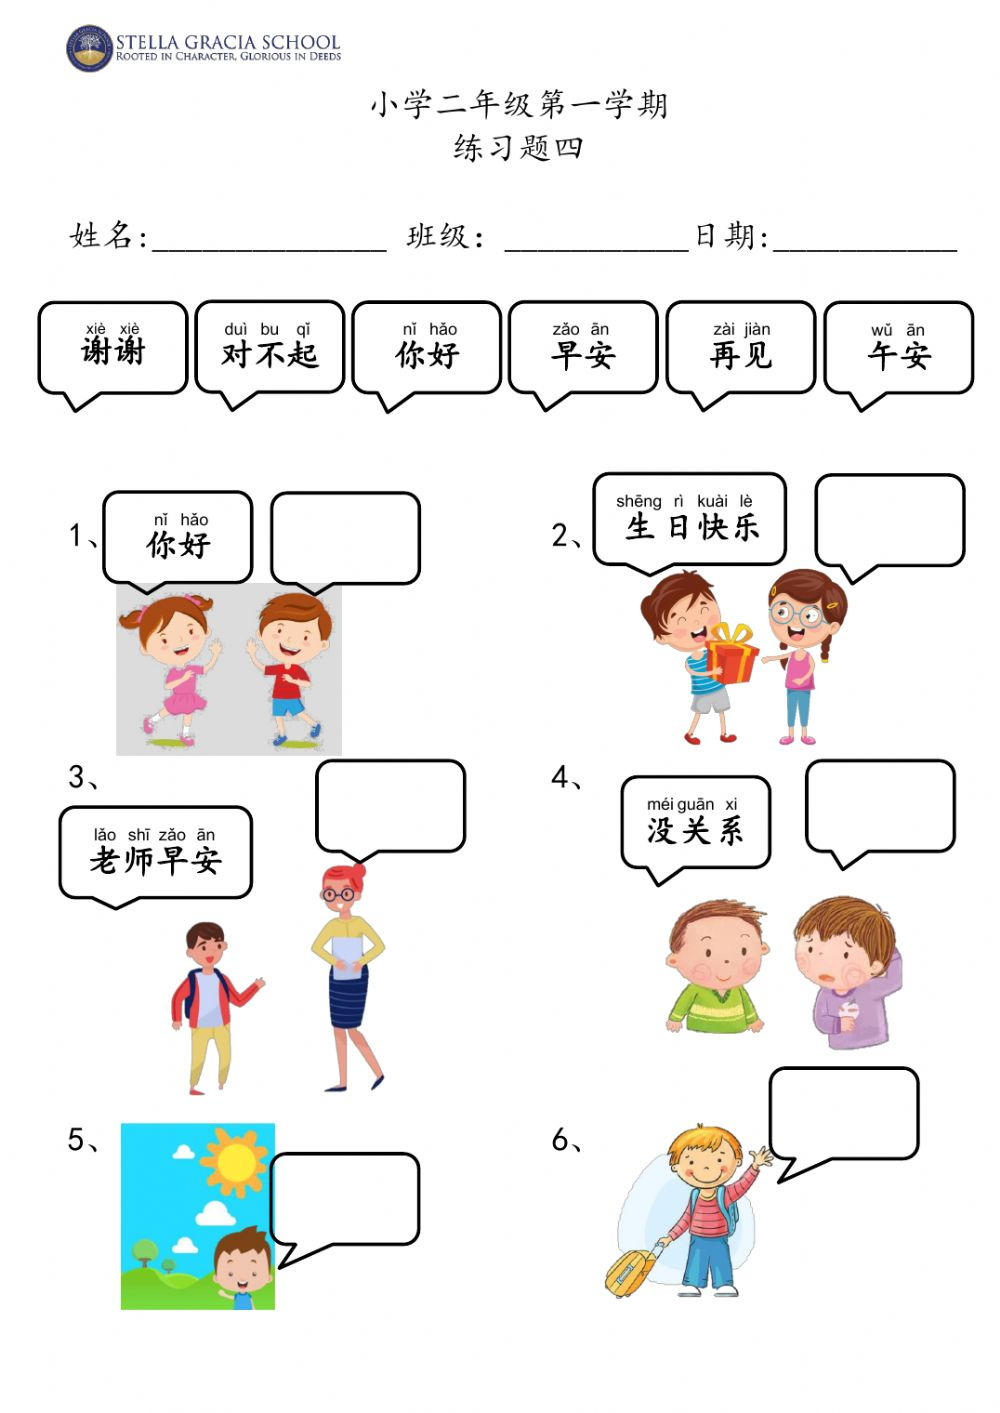 Chinese Greetings Exercise Worksheet